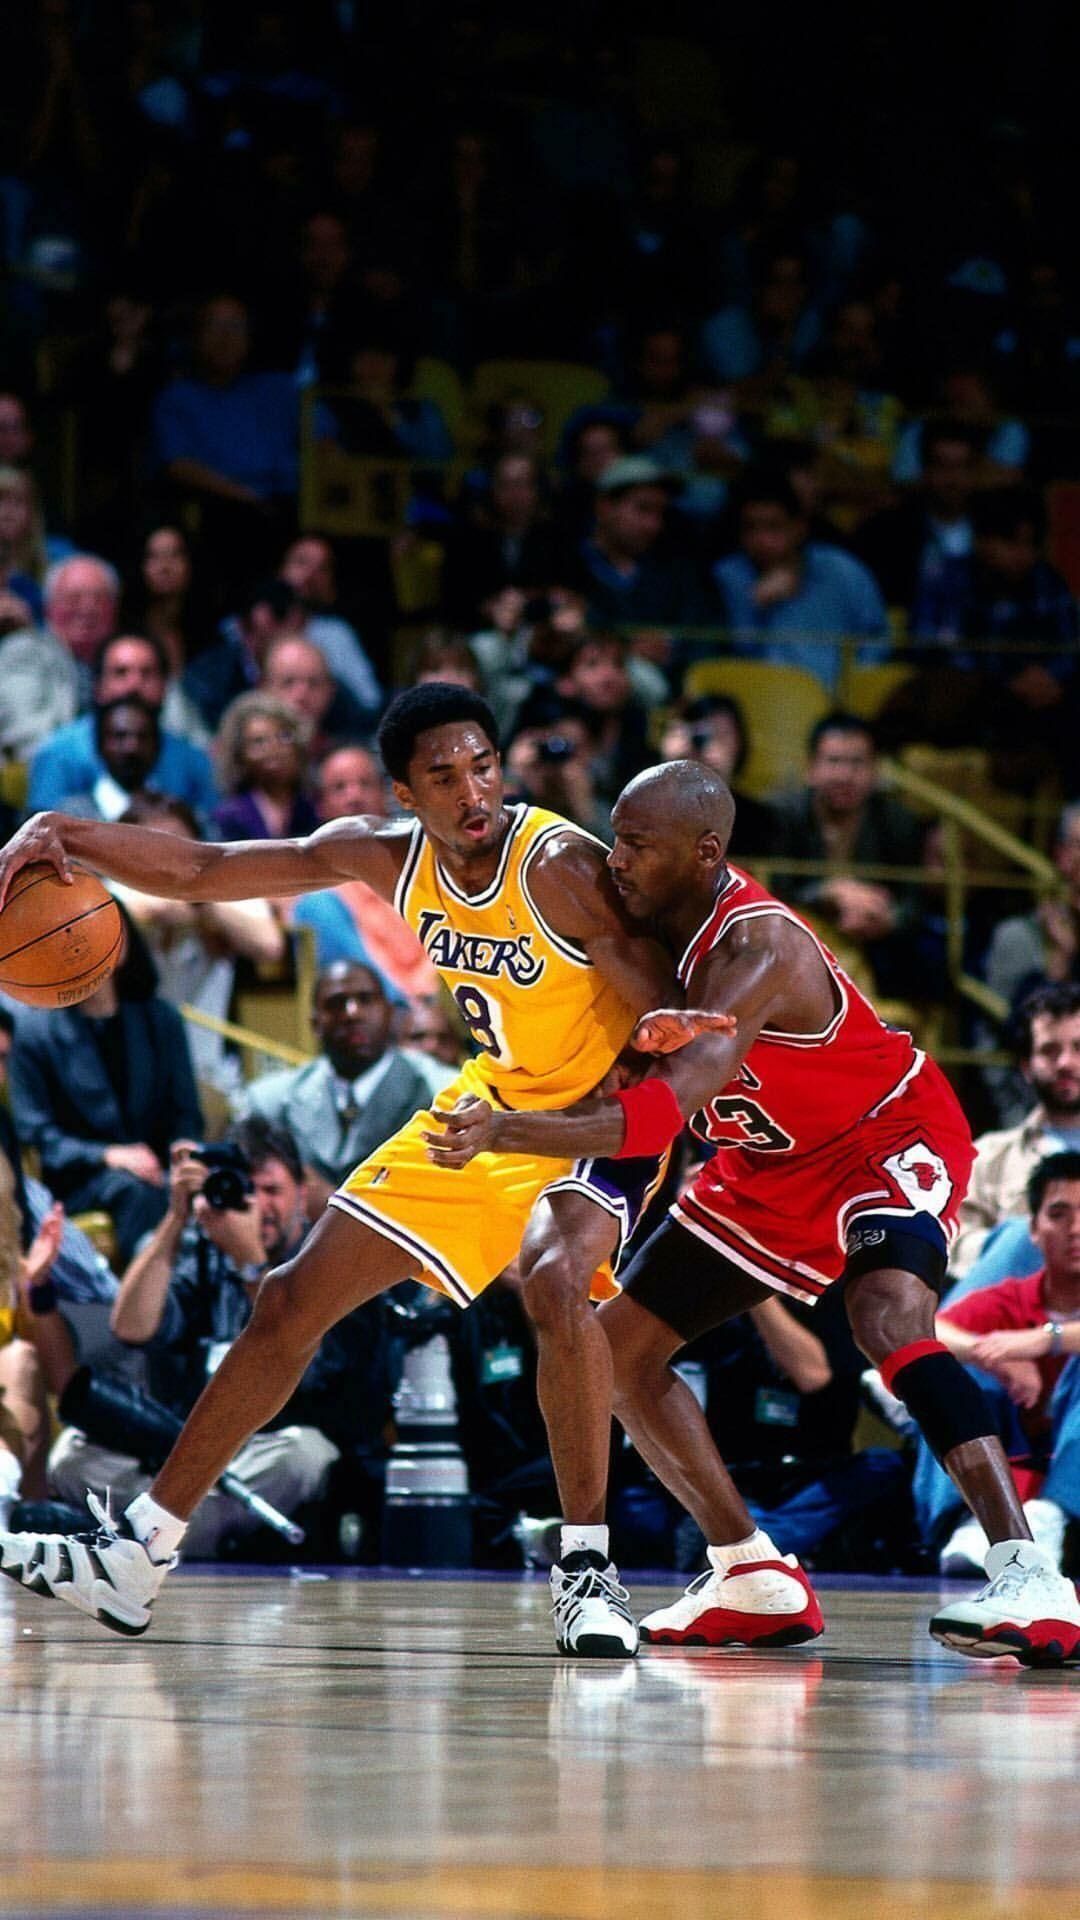 Dunk Kobe Bryant Picture #Dunk #Kobe #Bryant #Picture #Wallpaper